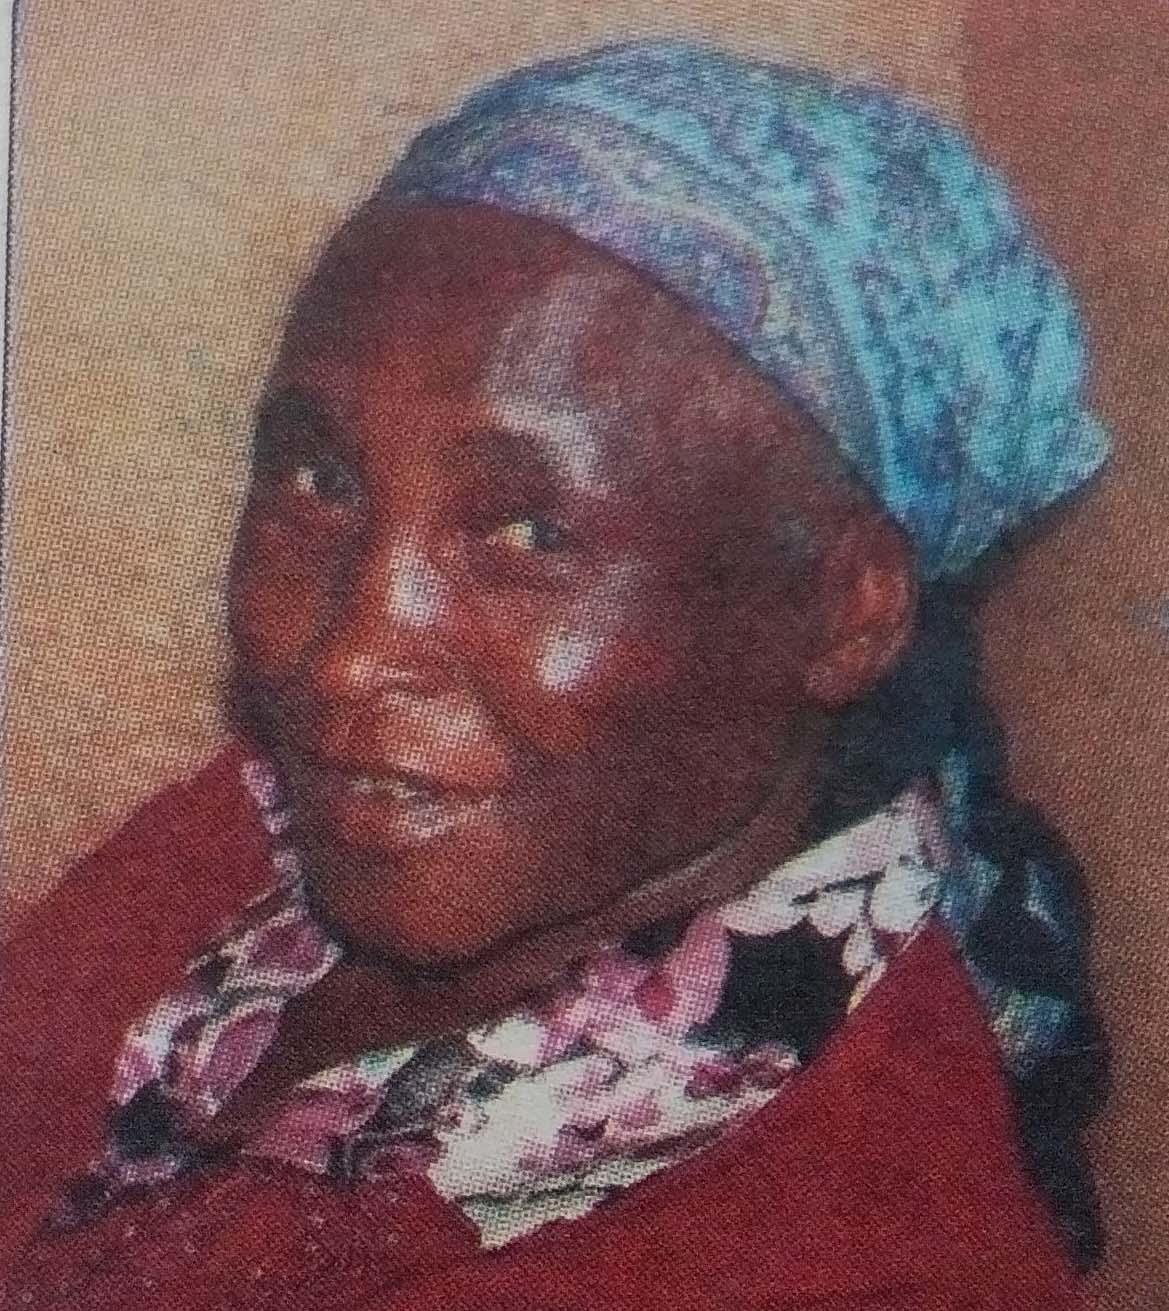 Obituary Image of Agatha Wambui Kago (Wa Maggy)